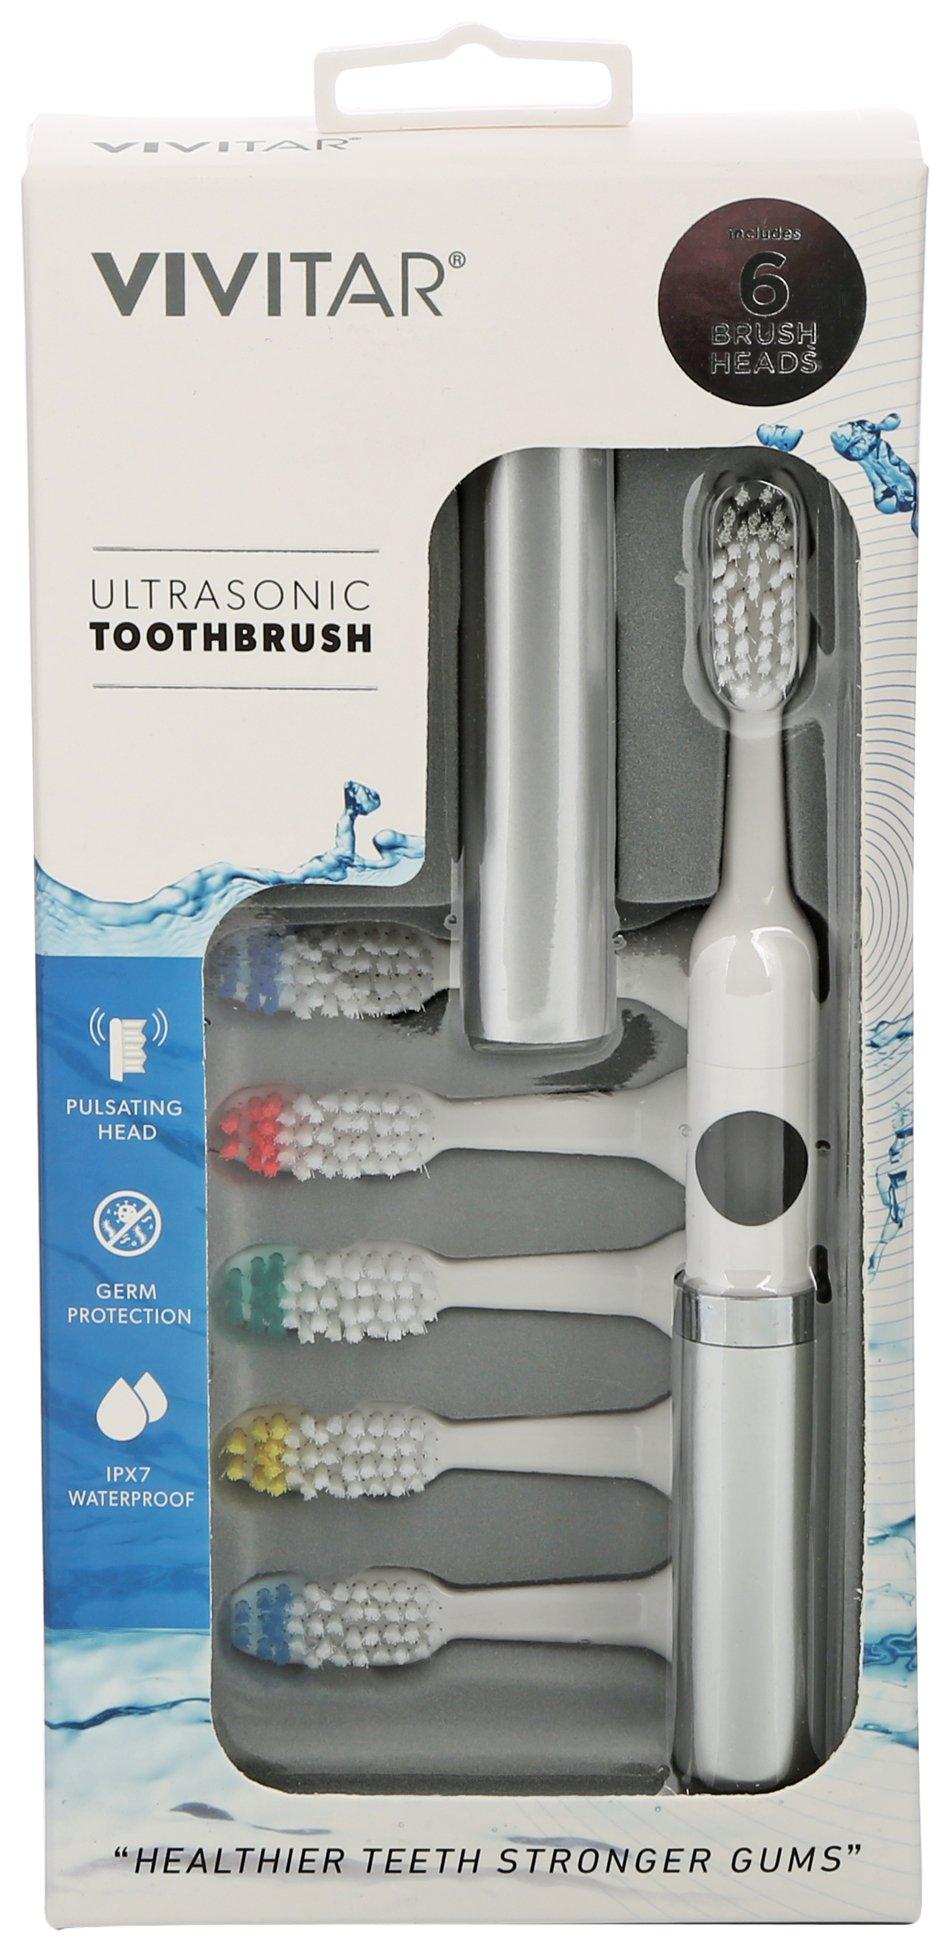 Ultrasonic Toothbrush With 6 Brush Heads